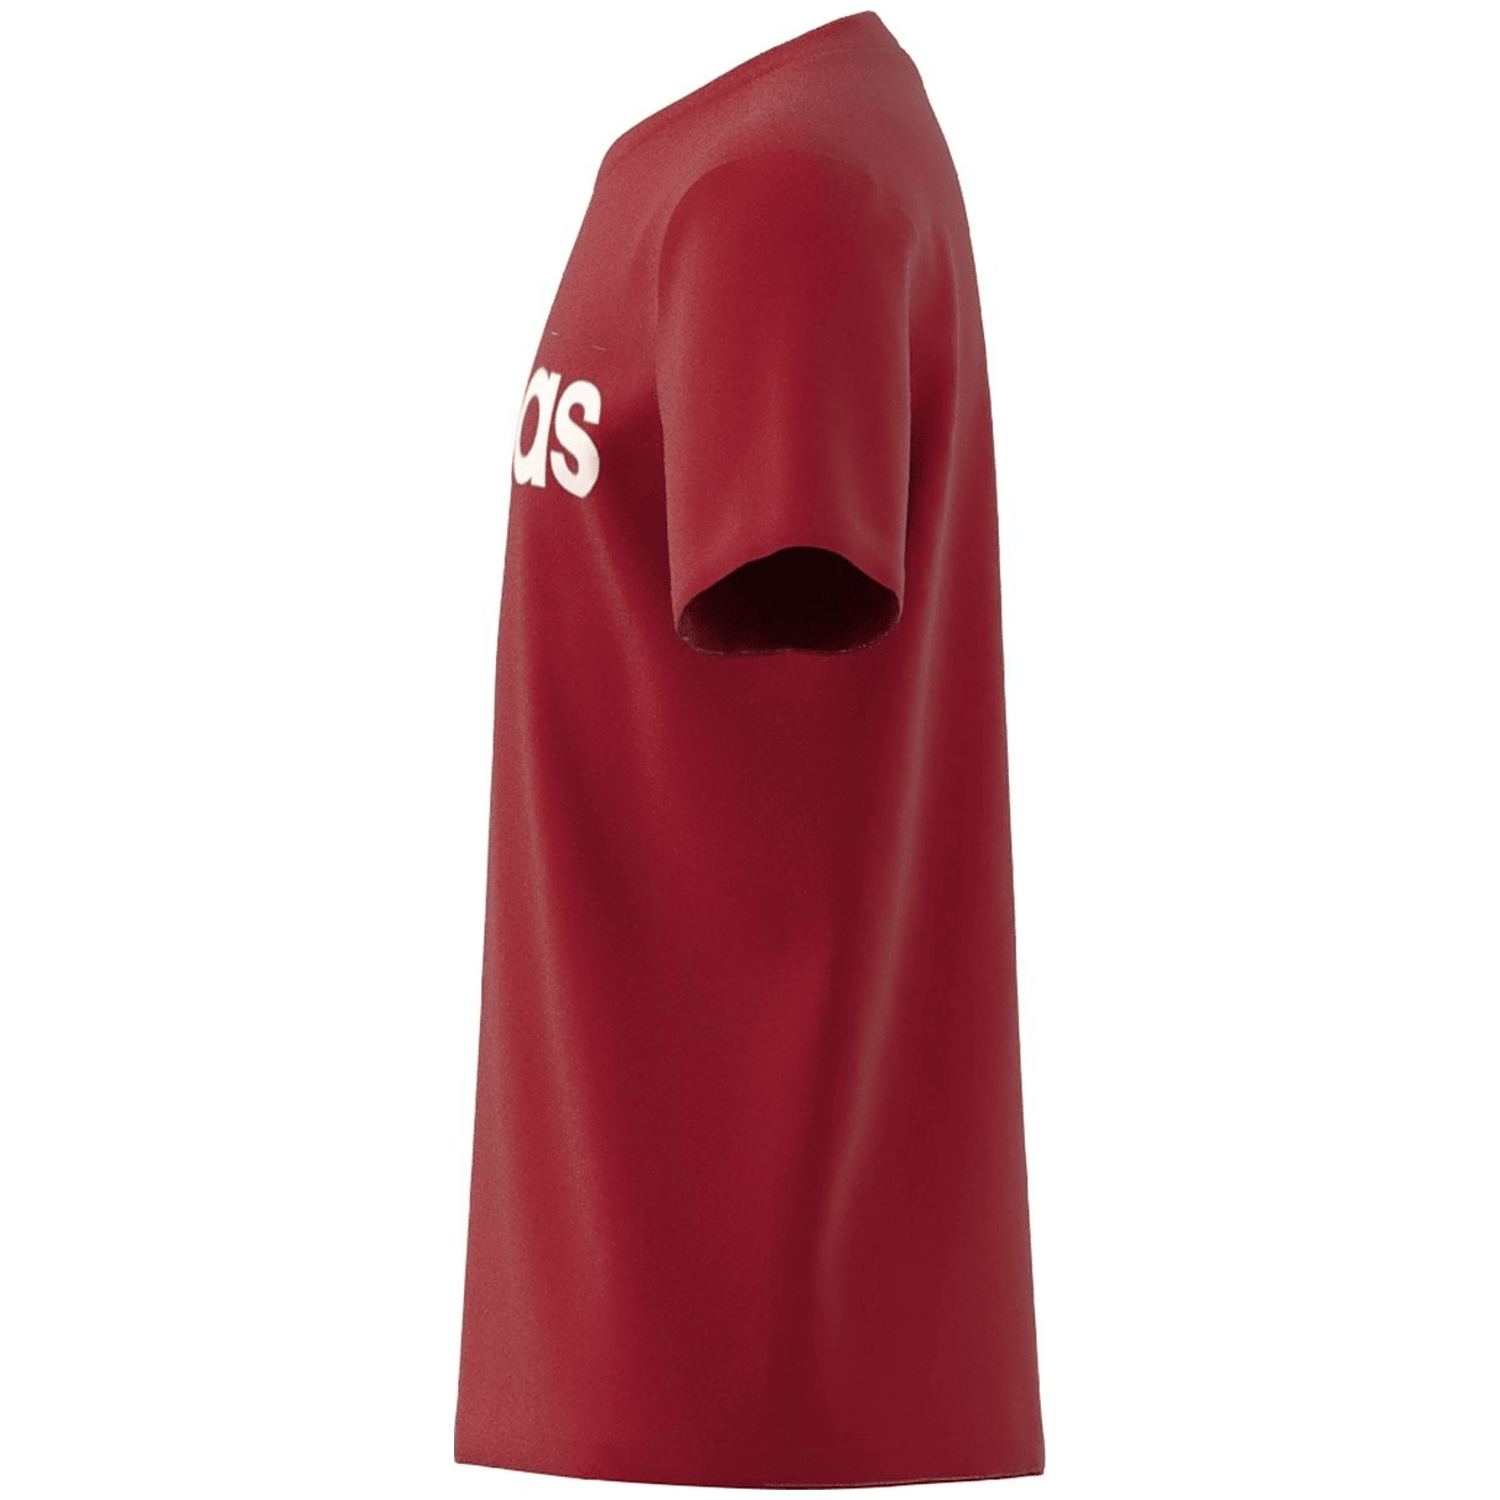 Adidas Essentials Linear Logo Cotton T-Shirt Kinder